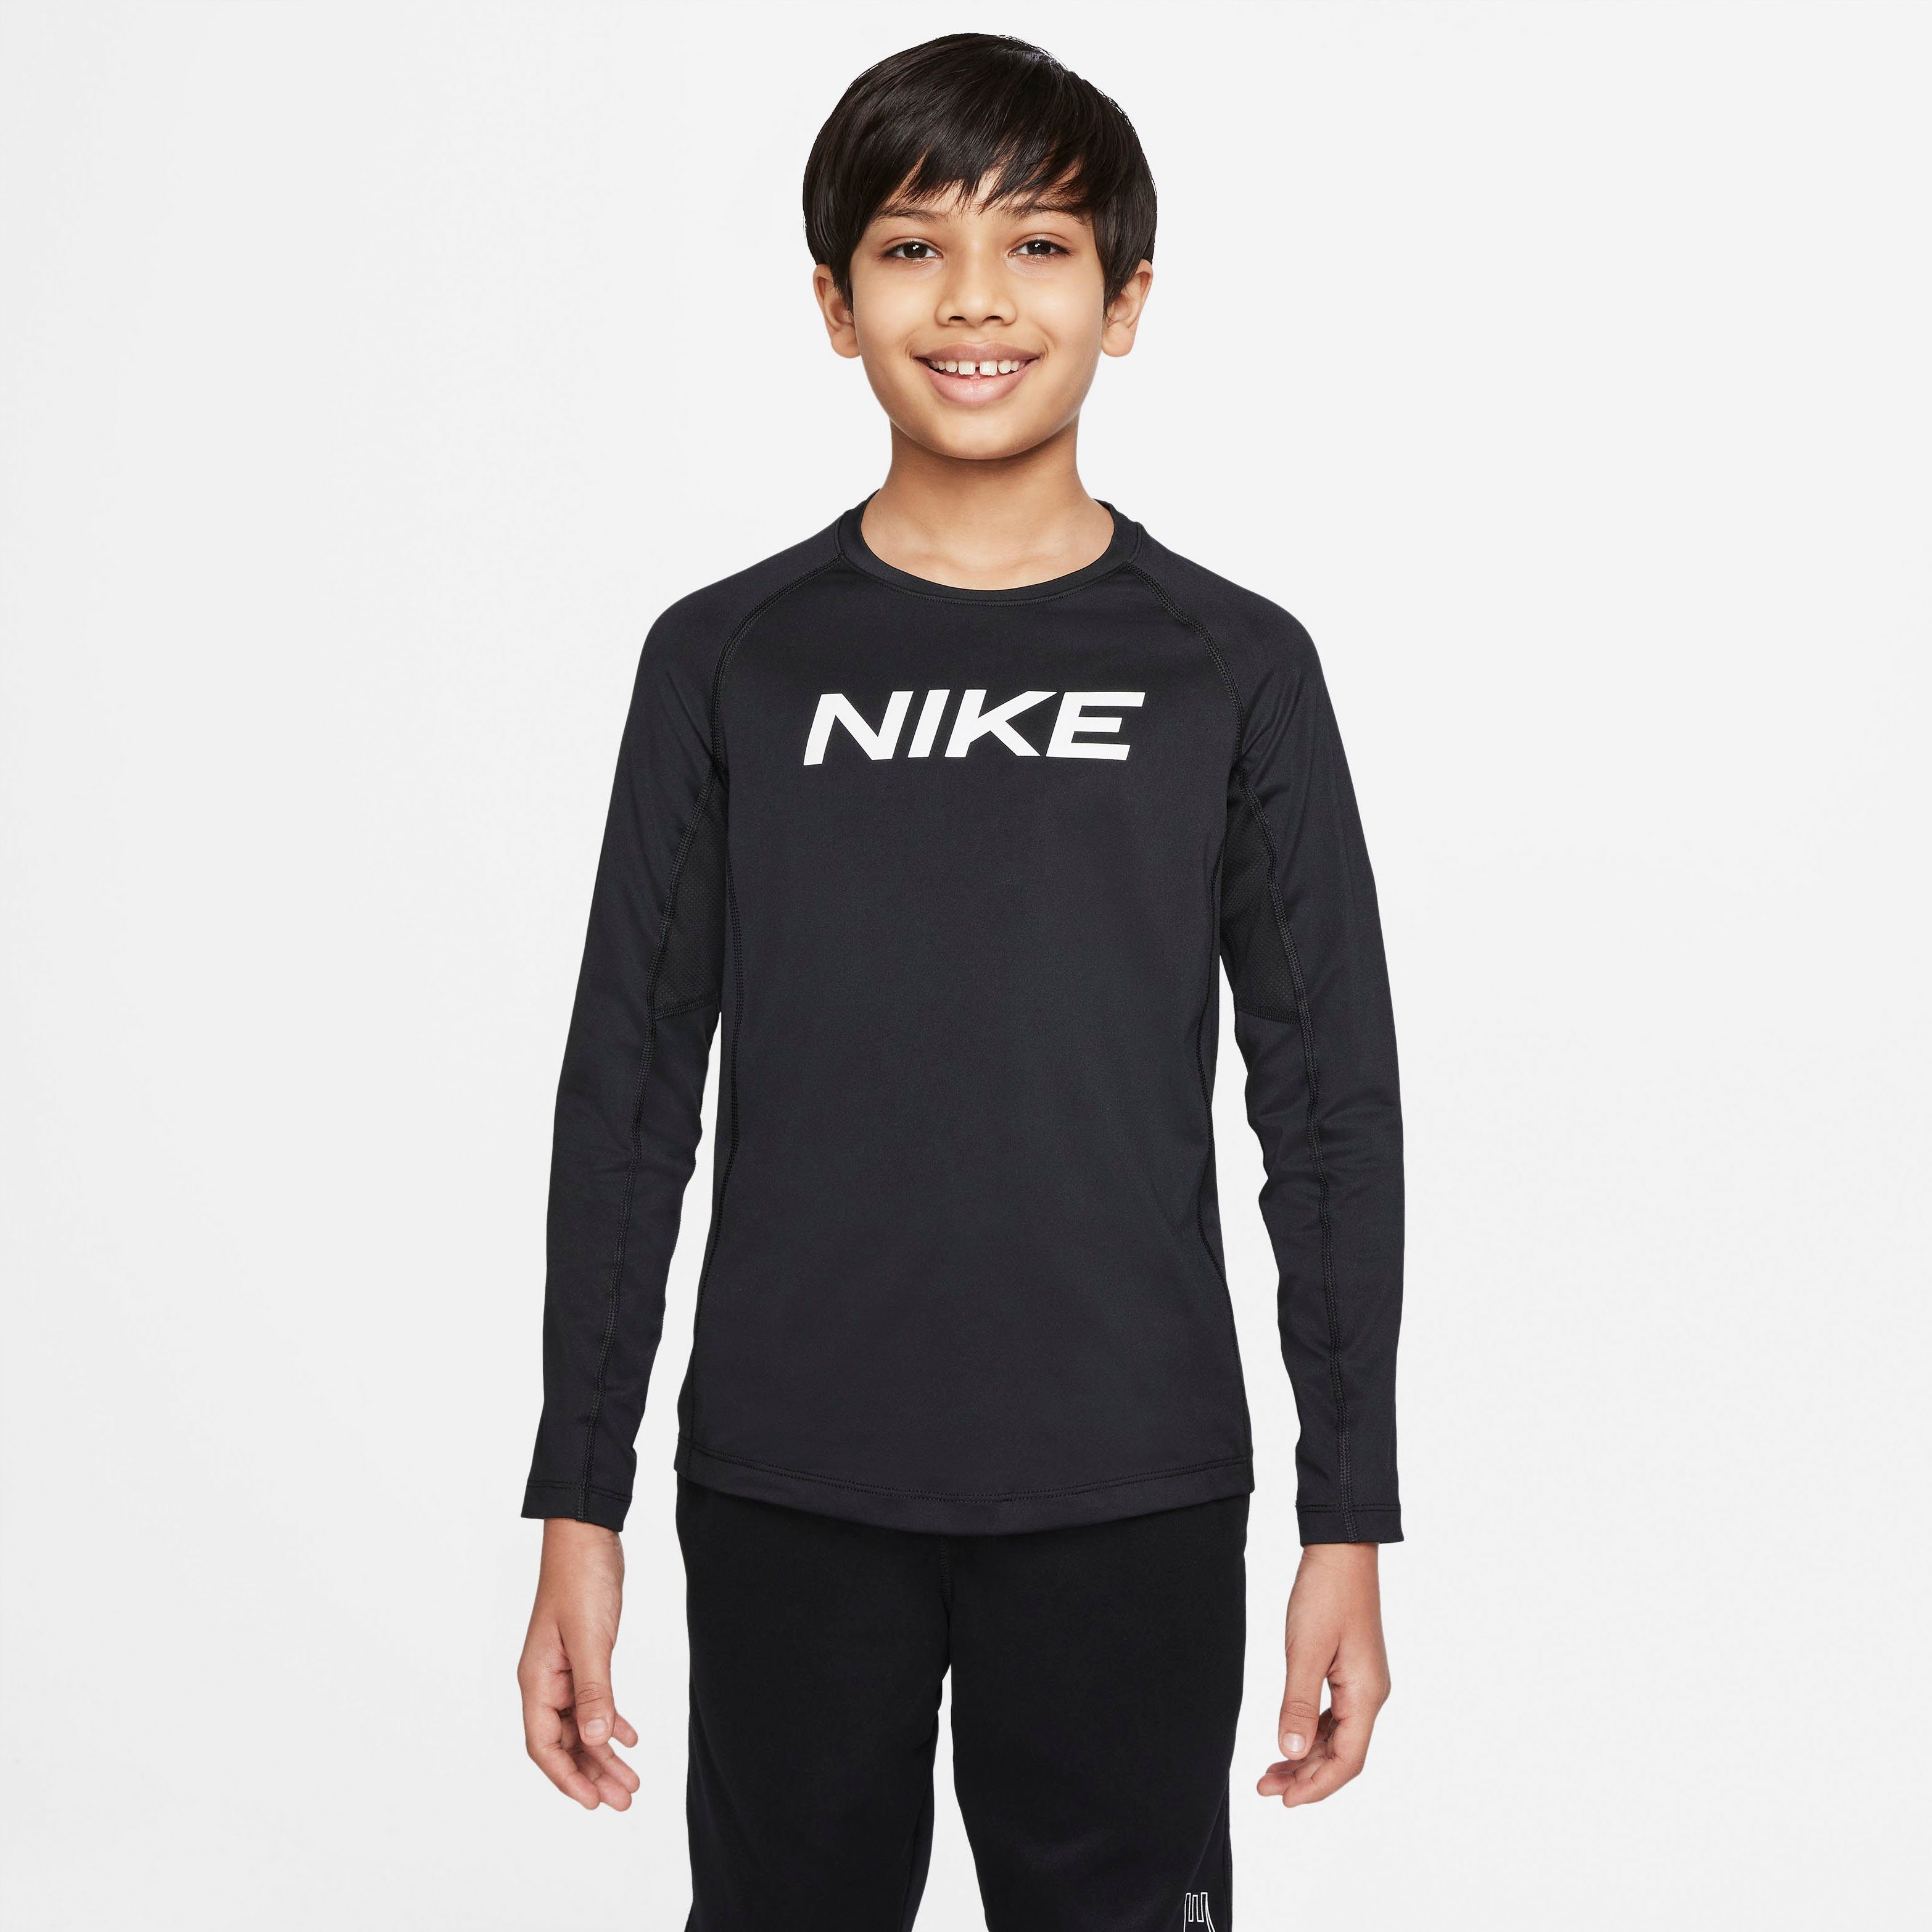 Nike Jungen Langarmshirts » Longsleeves online kaufen | OTTO